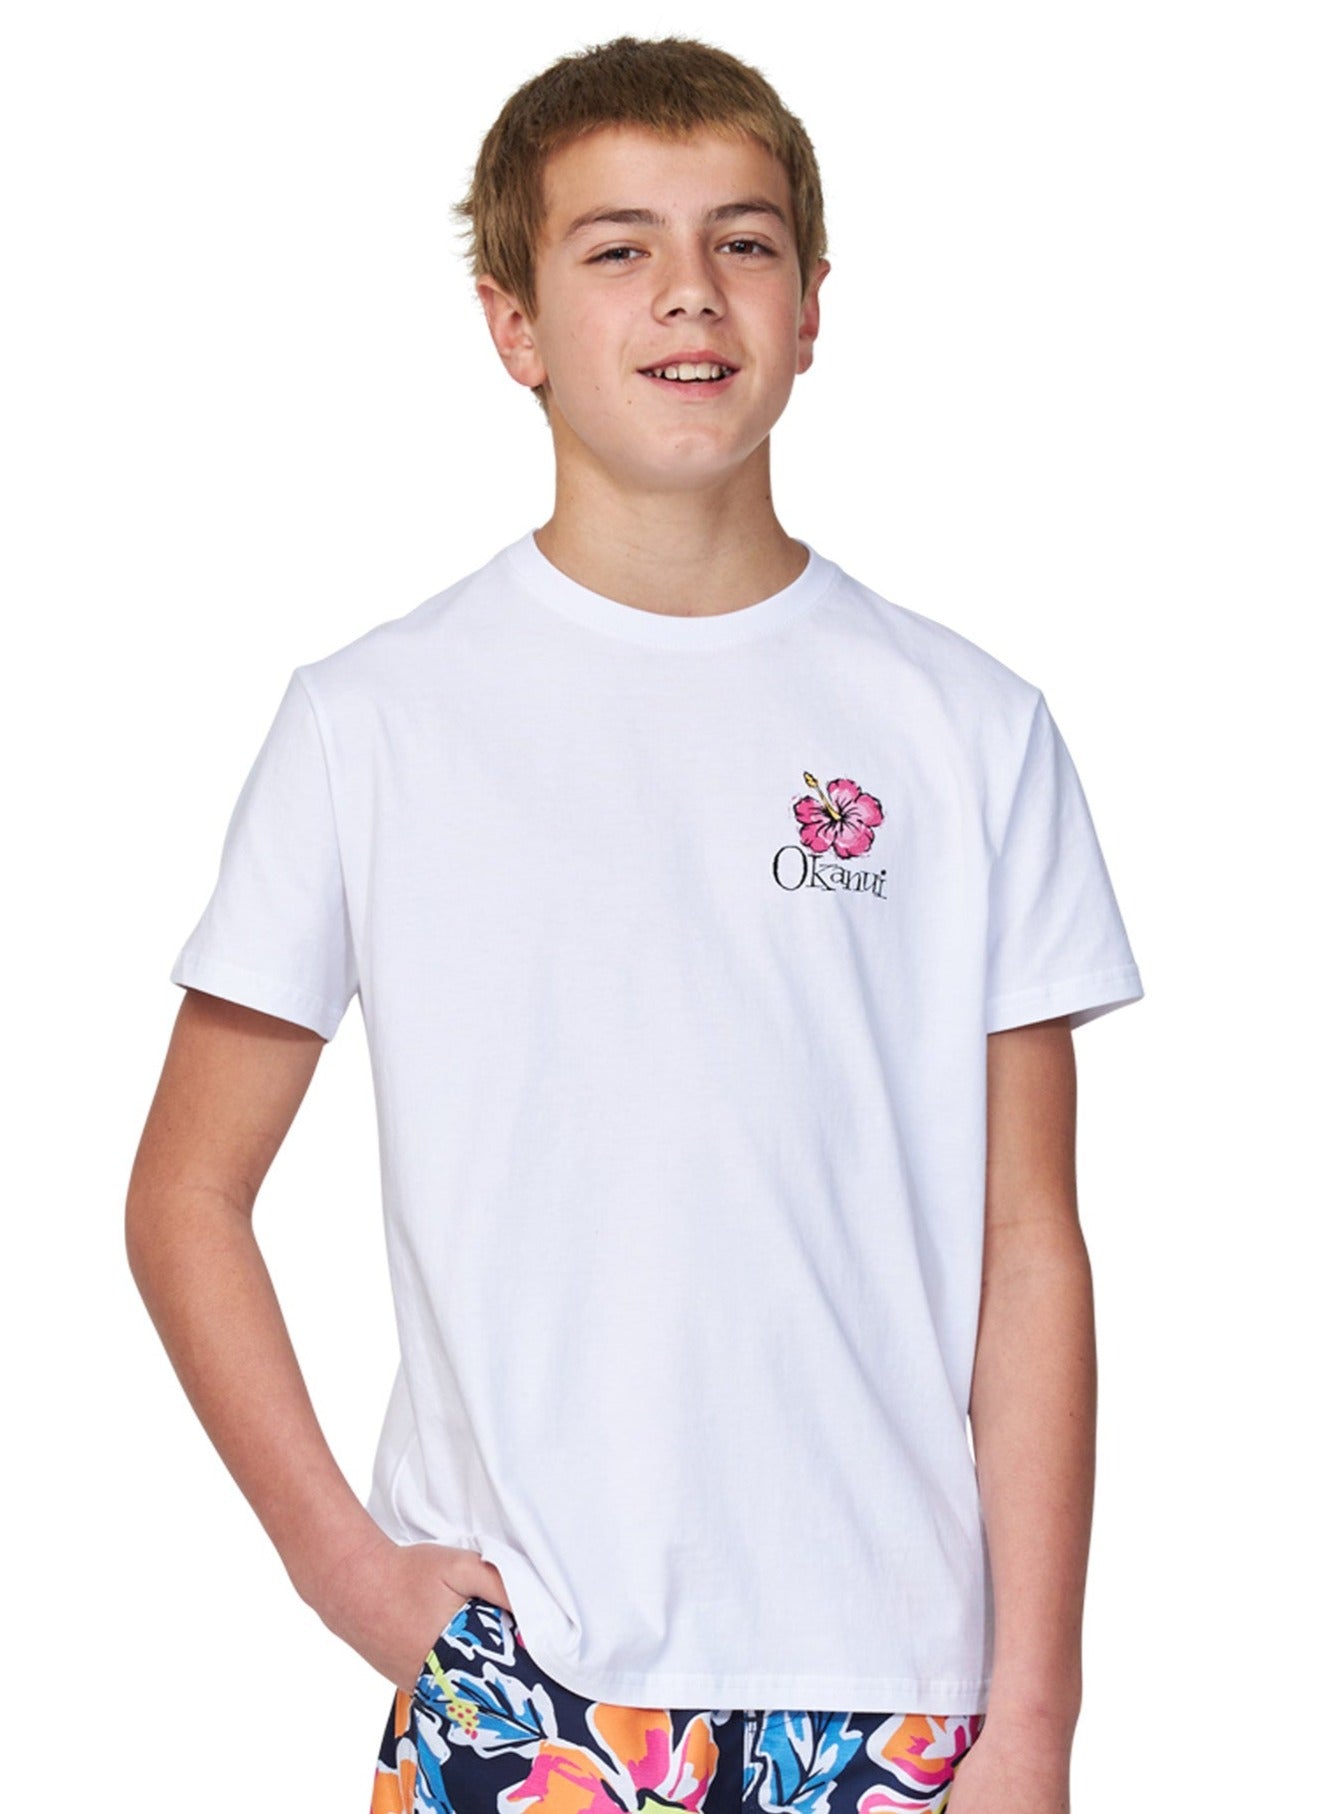 Boys - T-Shirt - Good Company - White